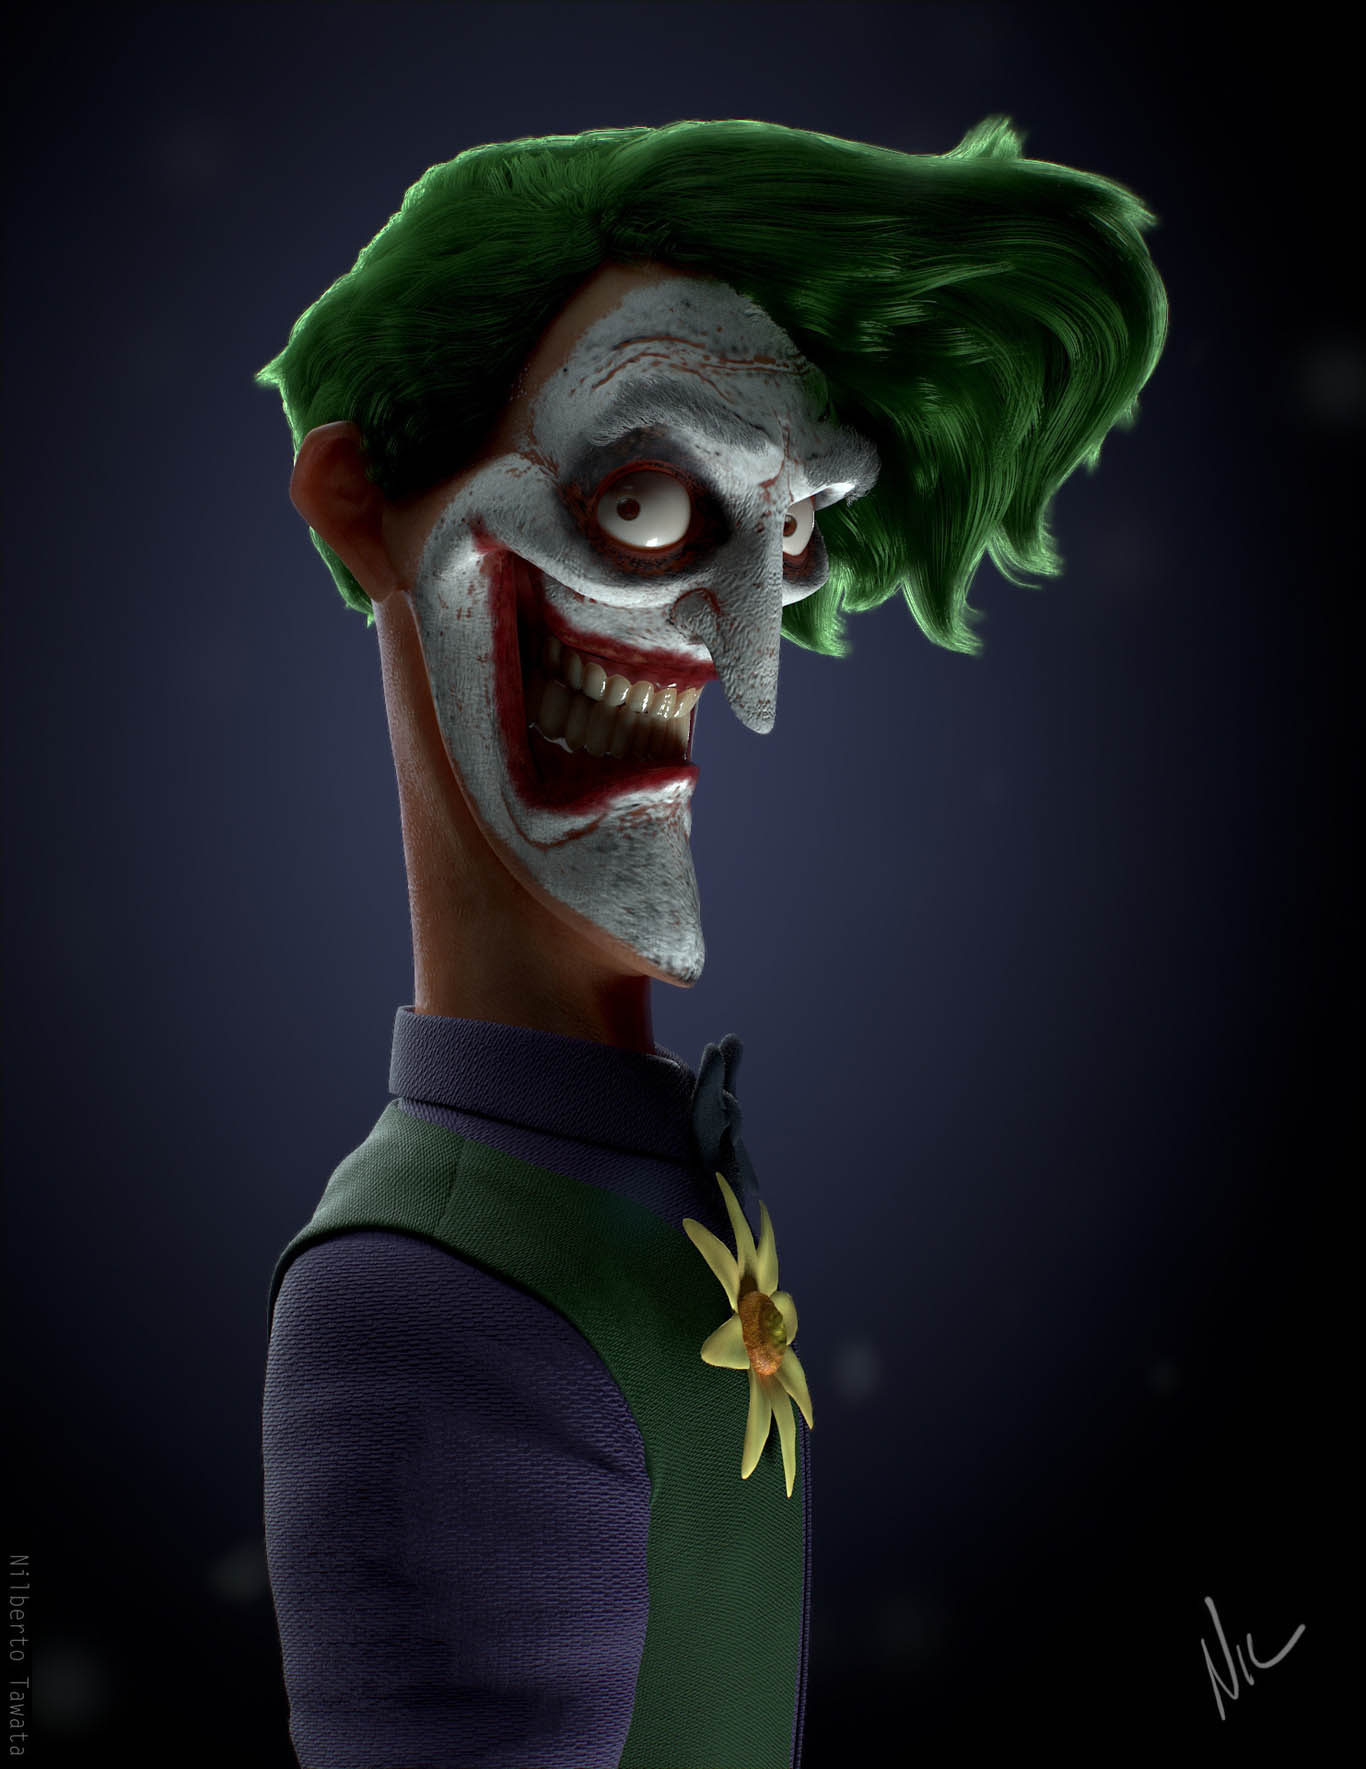 3d model character joker by nilberto tawata